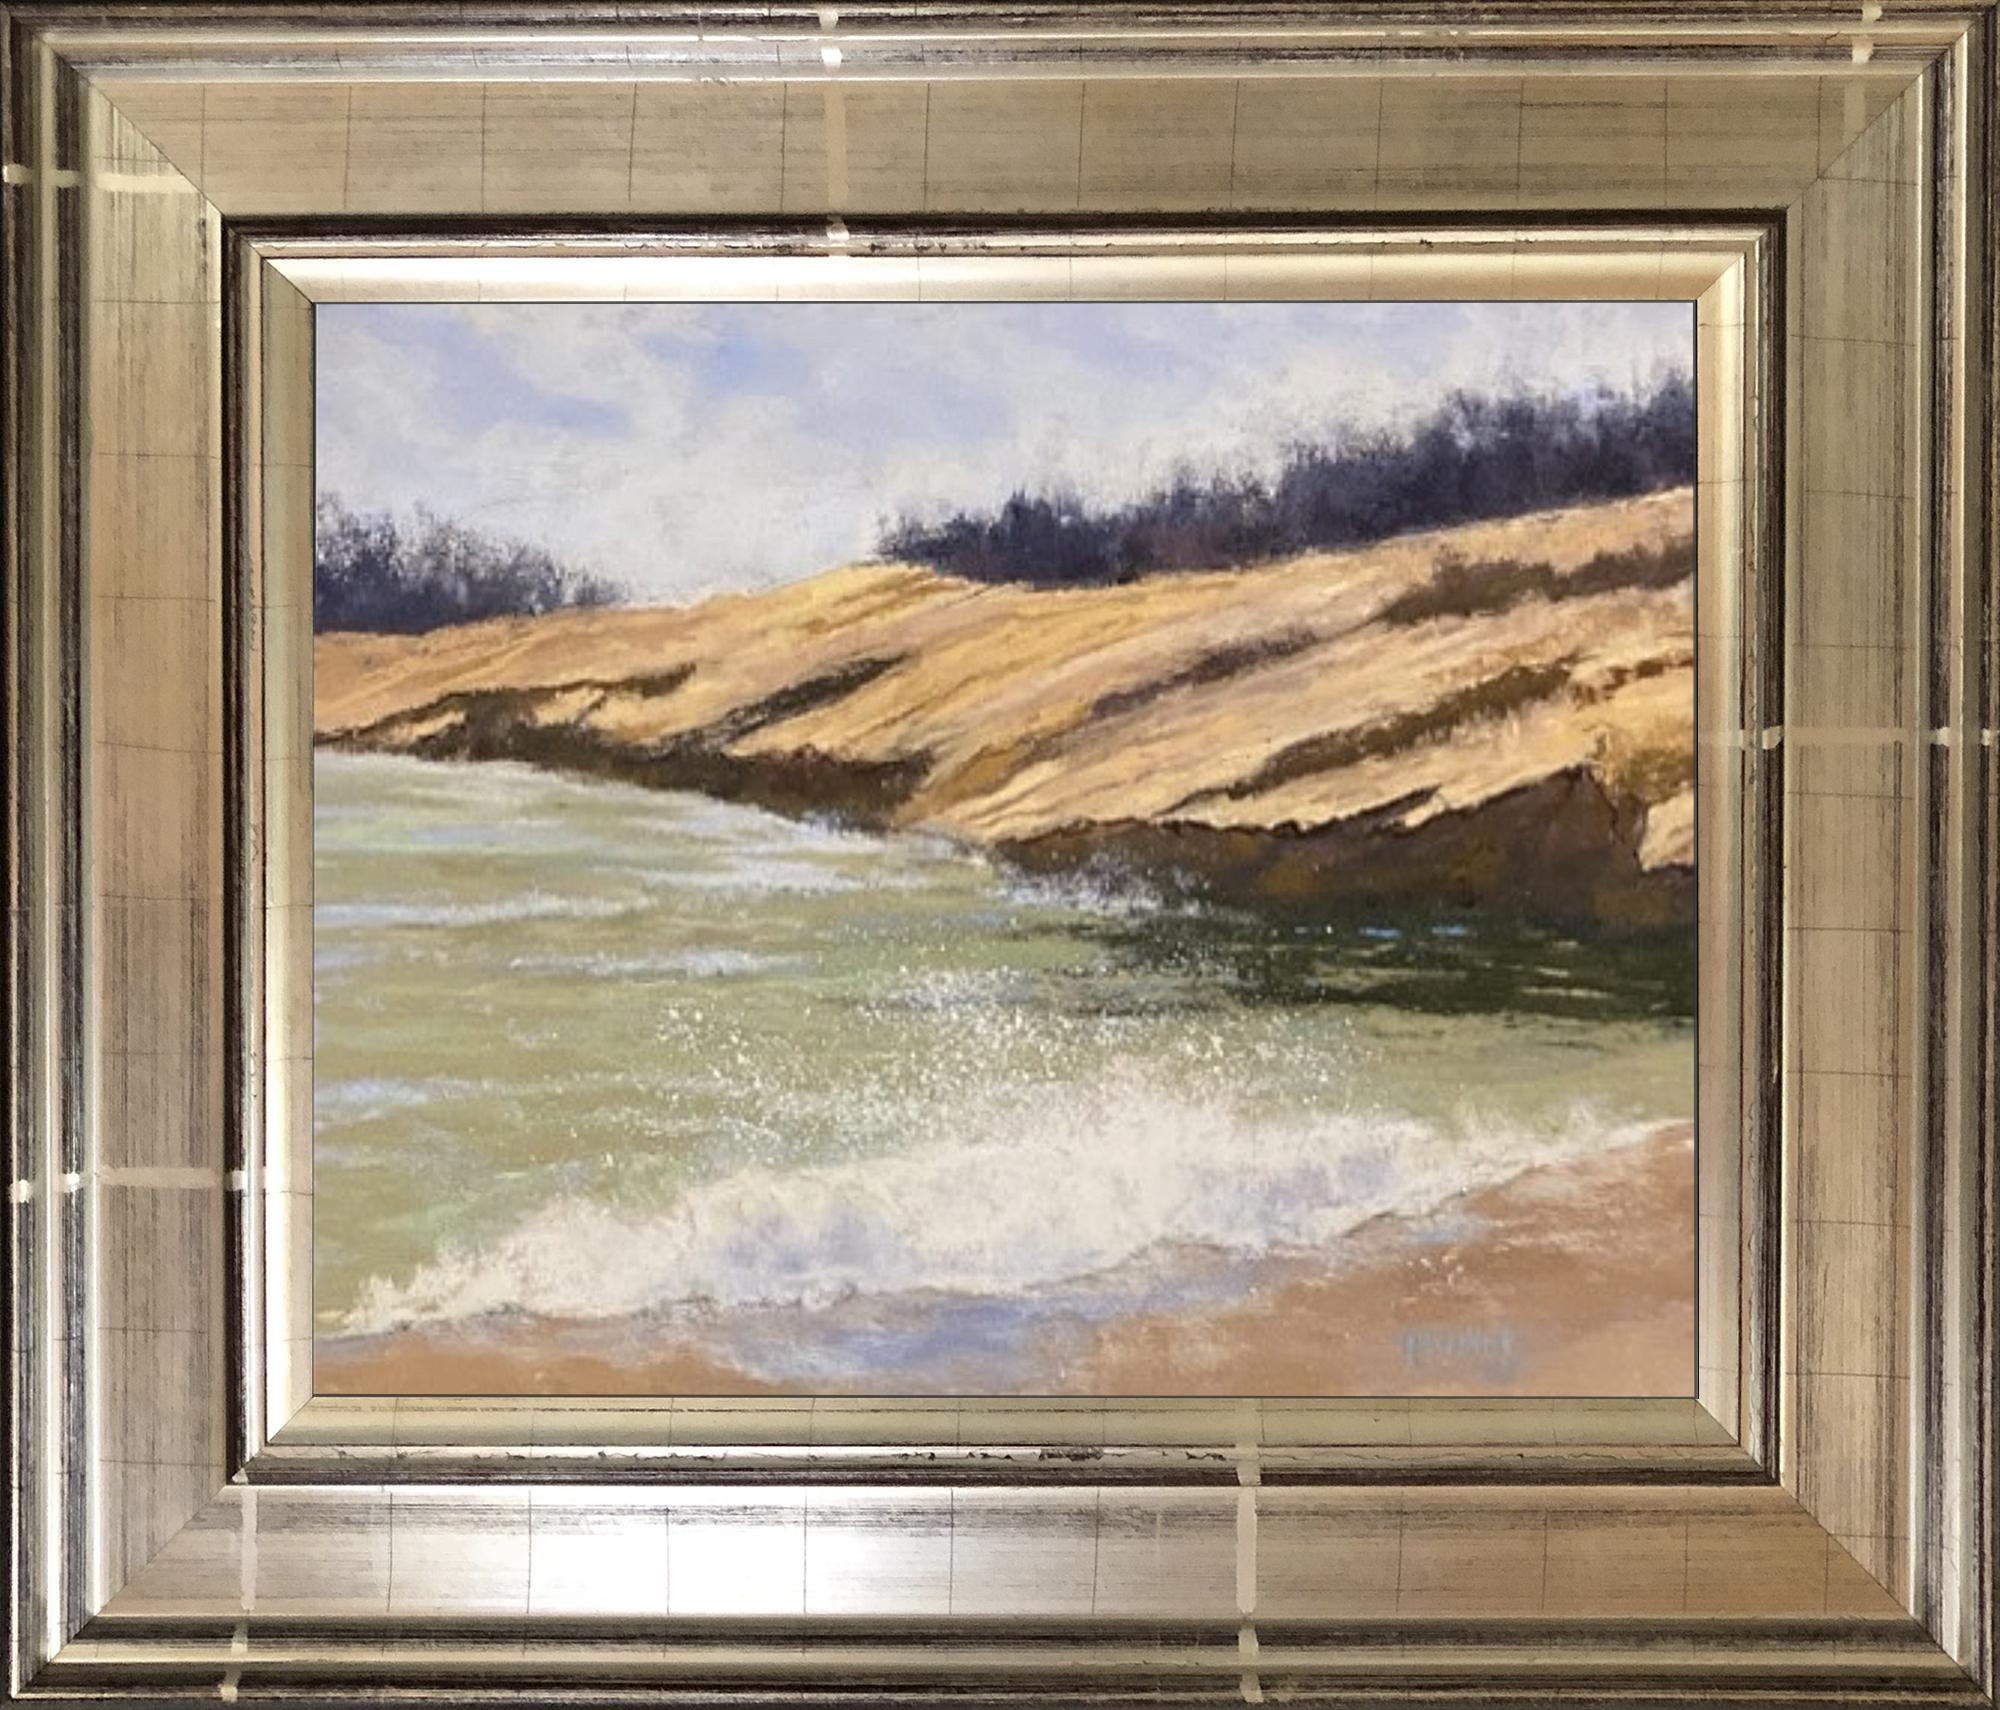 Dina Gardner Landscape Painting - Maine Memories, Original Impressionist Seascape Pastel Painting on Board, 2021